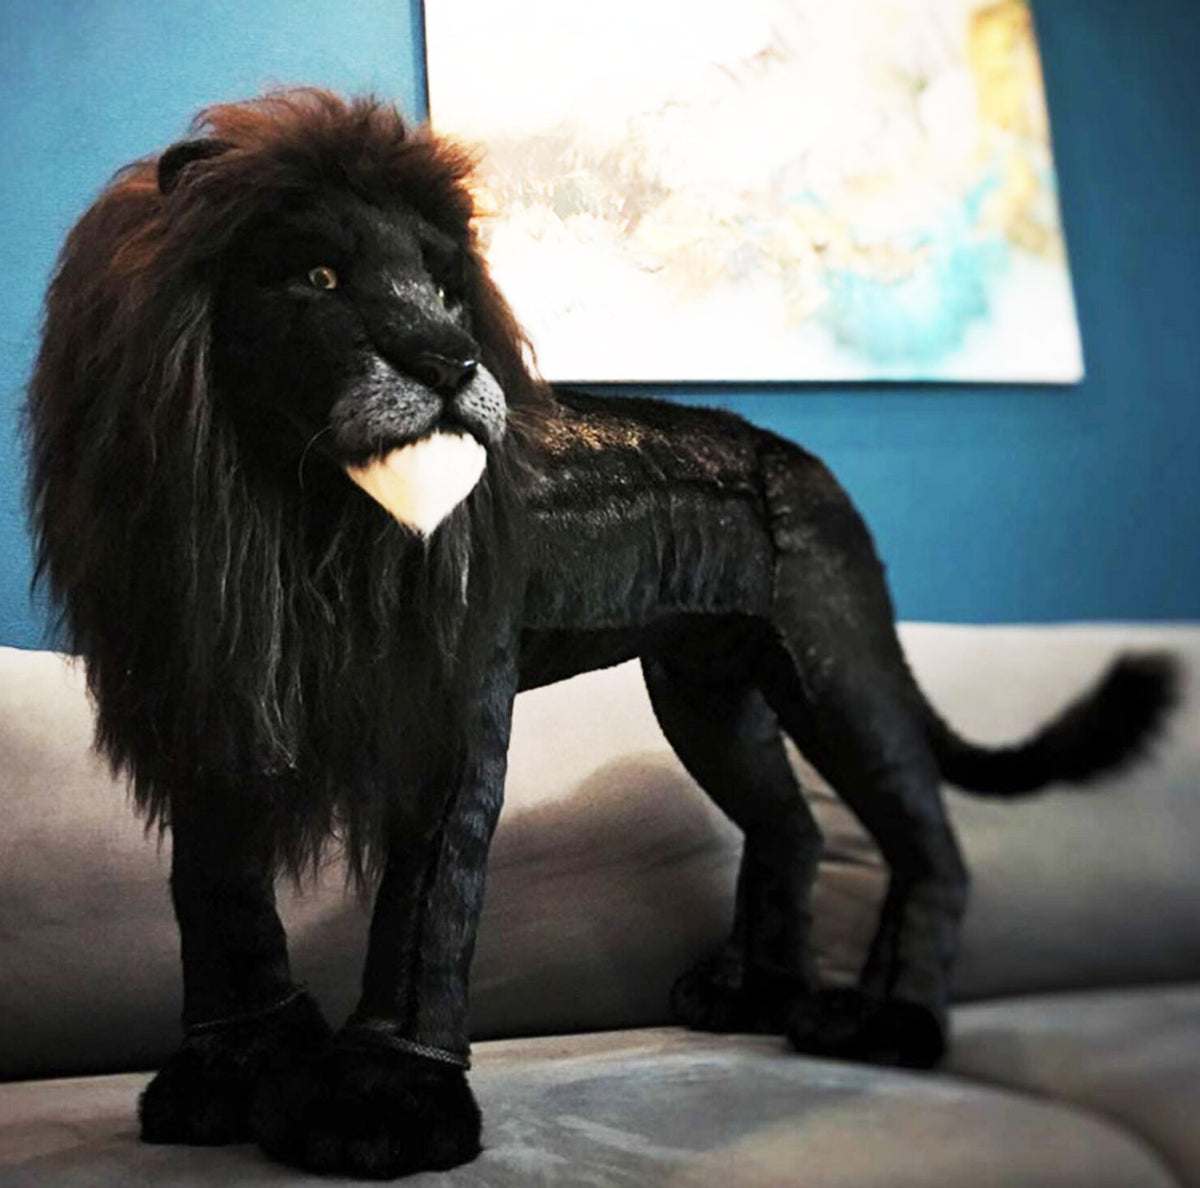 PLUSH Lion, Black Lion Stuffed Animal - Big Lion Realistic Art Doll